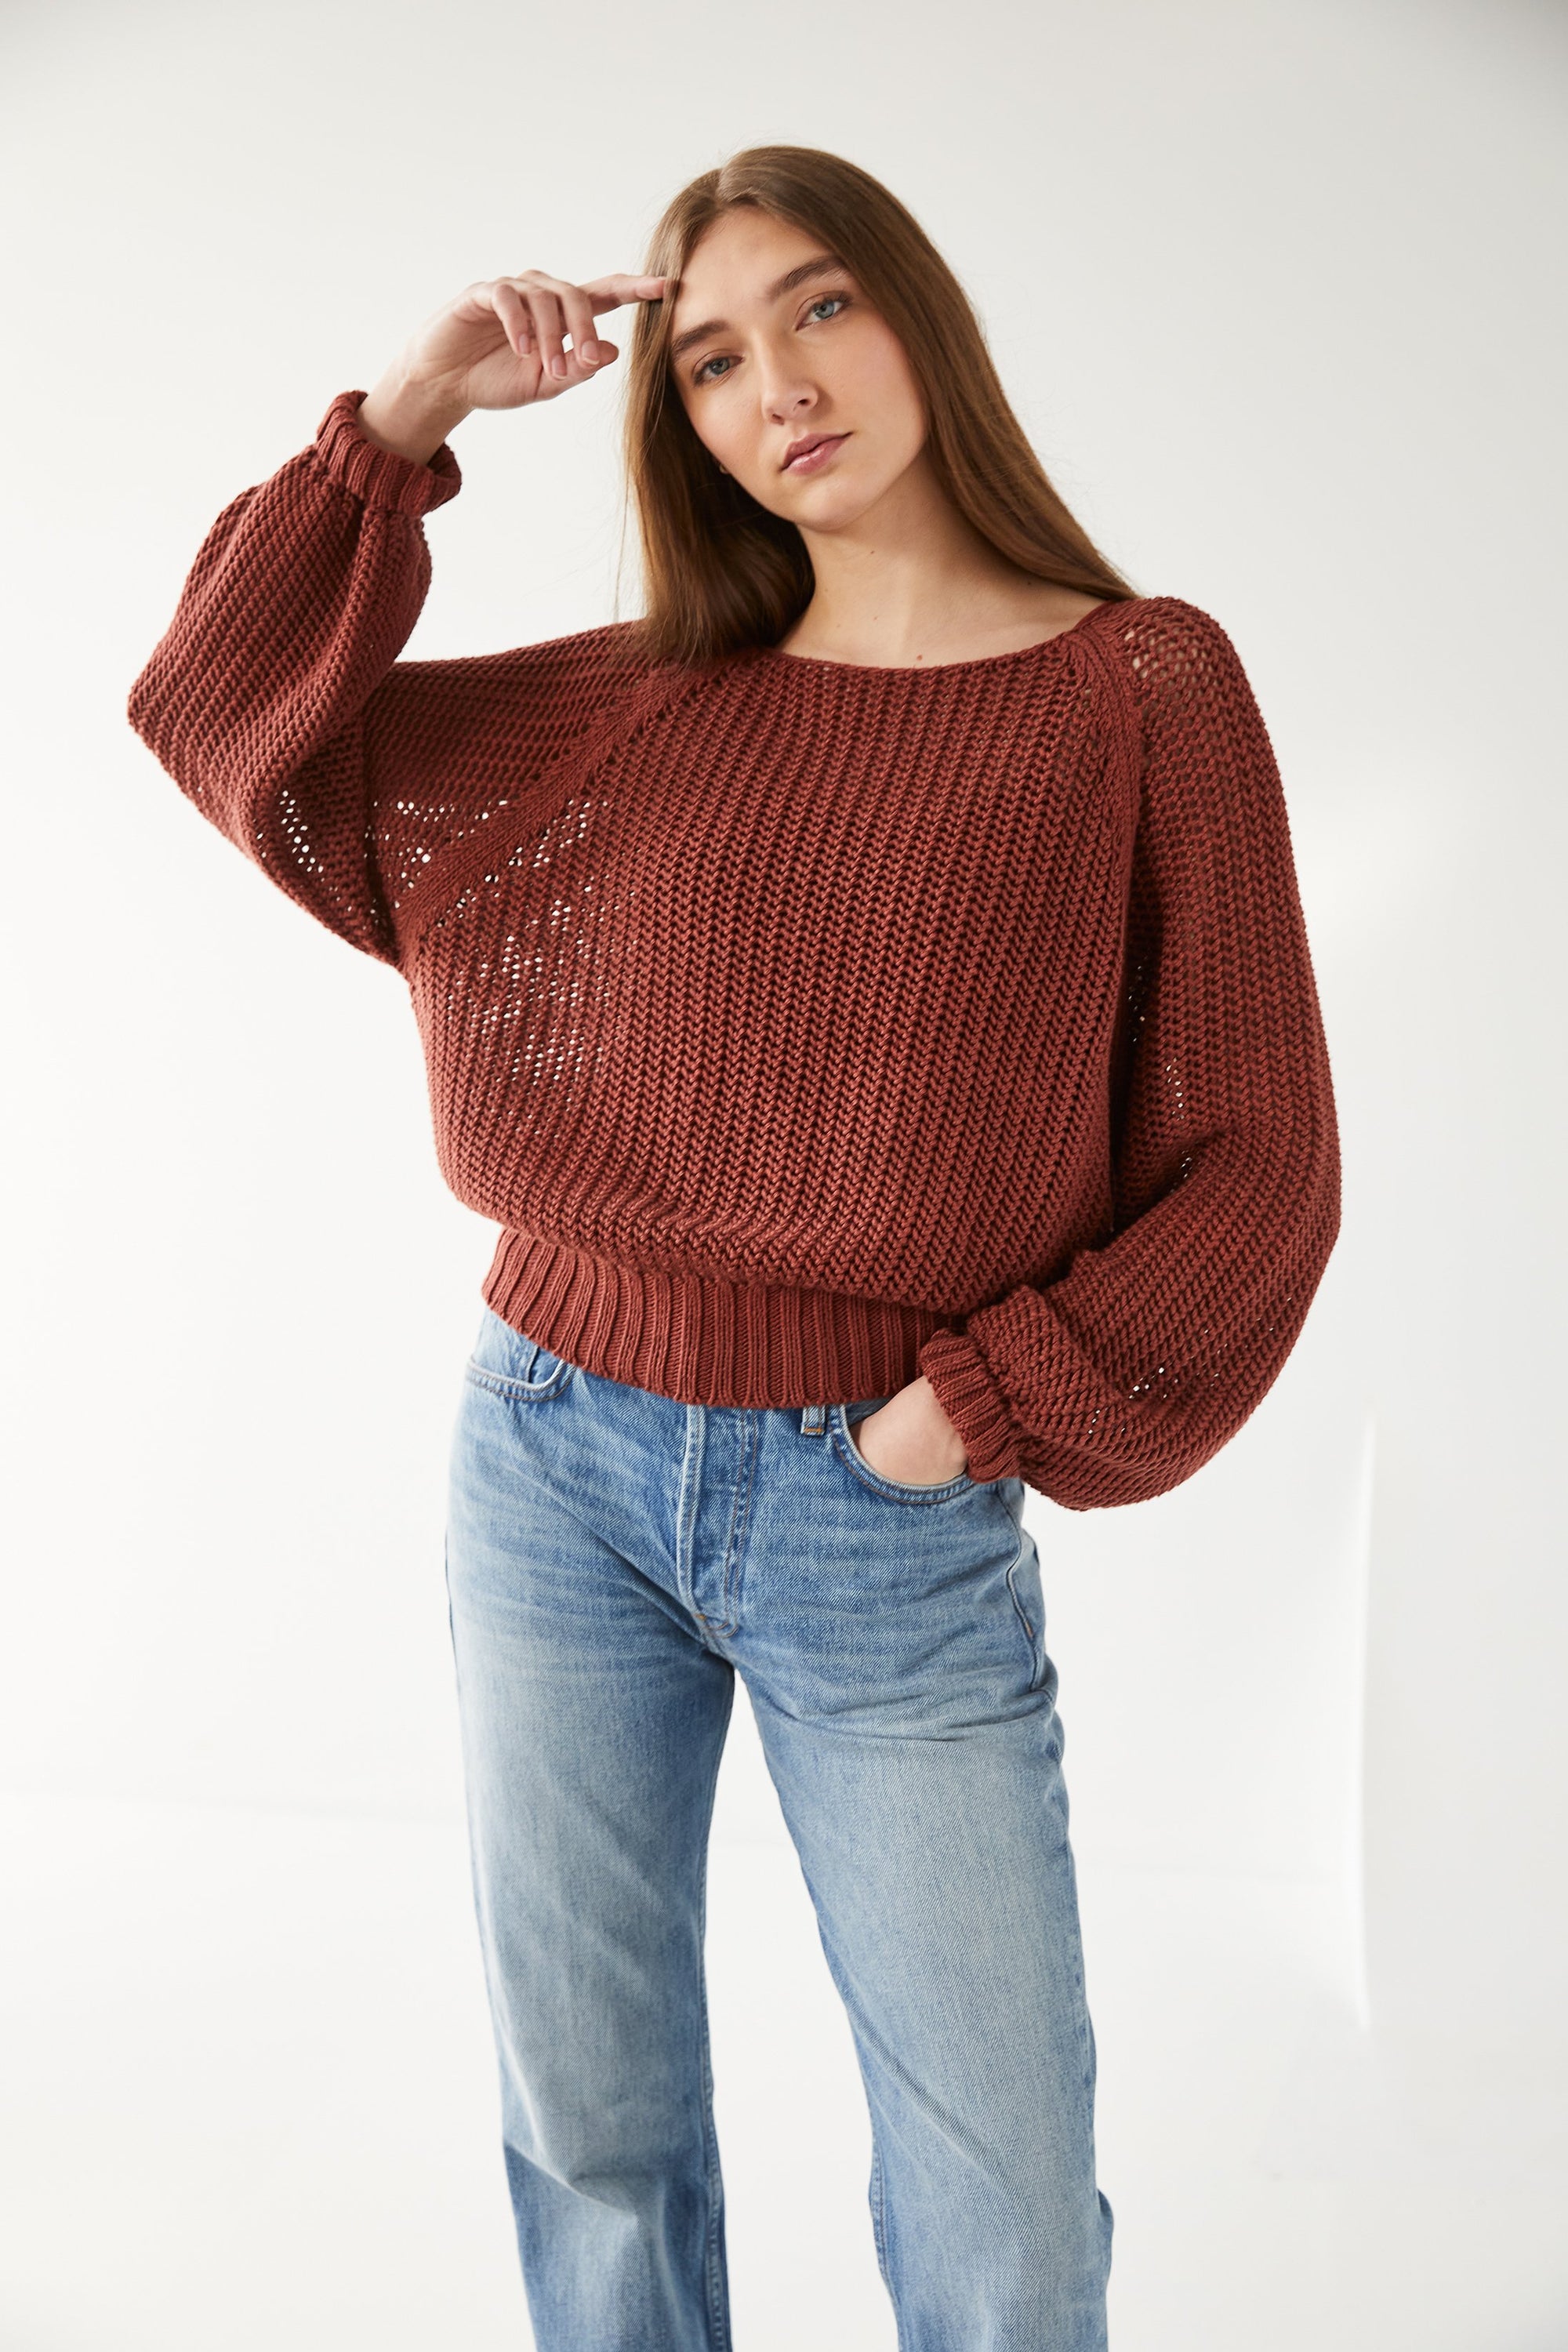 Adult Net Stitch Sweater - Cocoa Bean